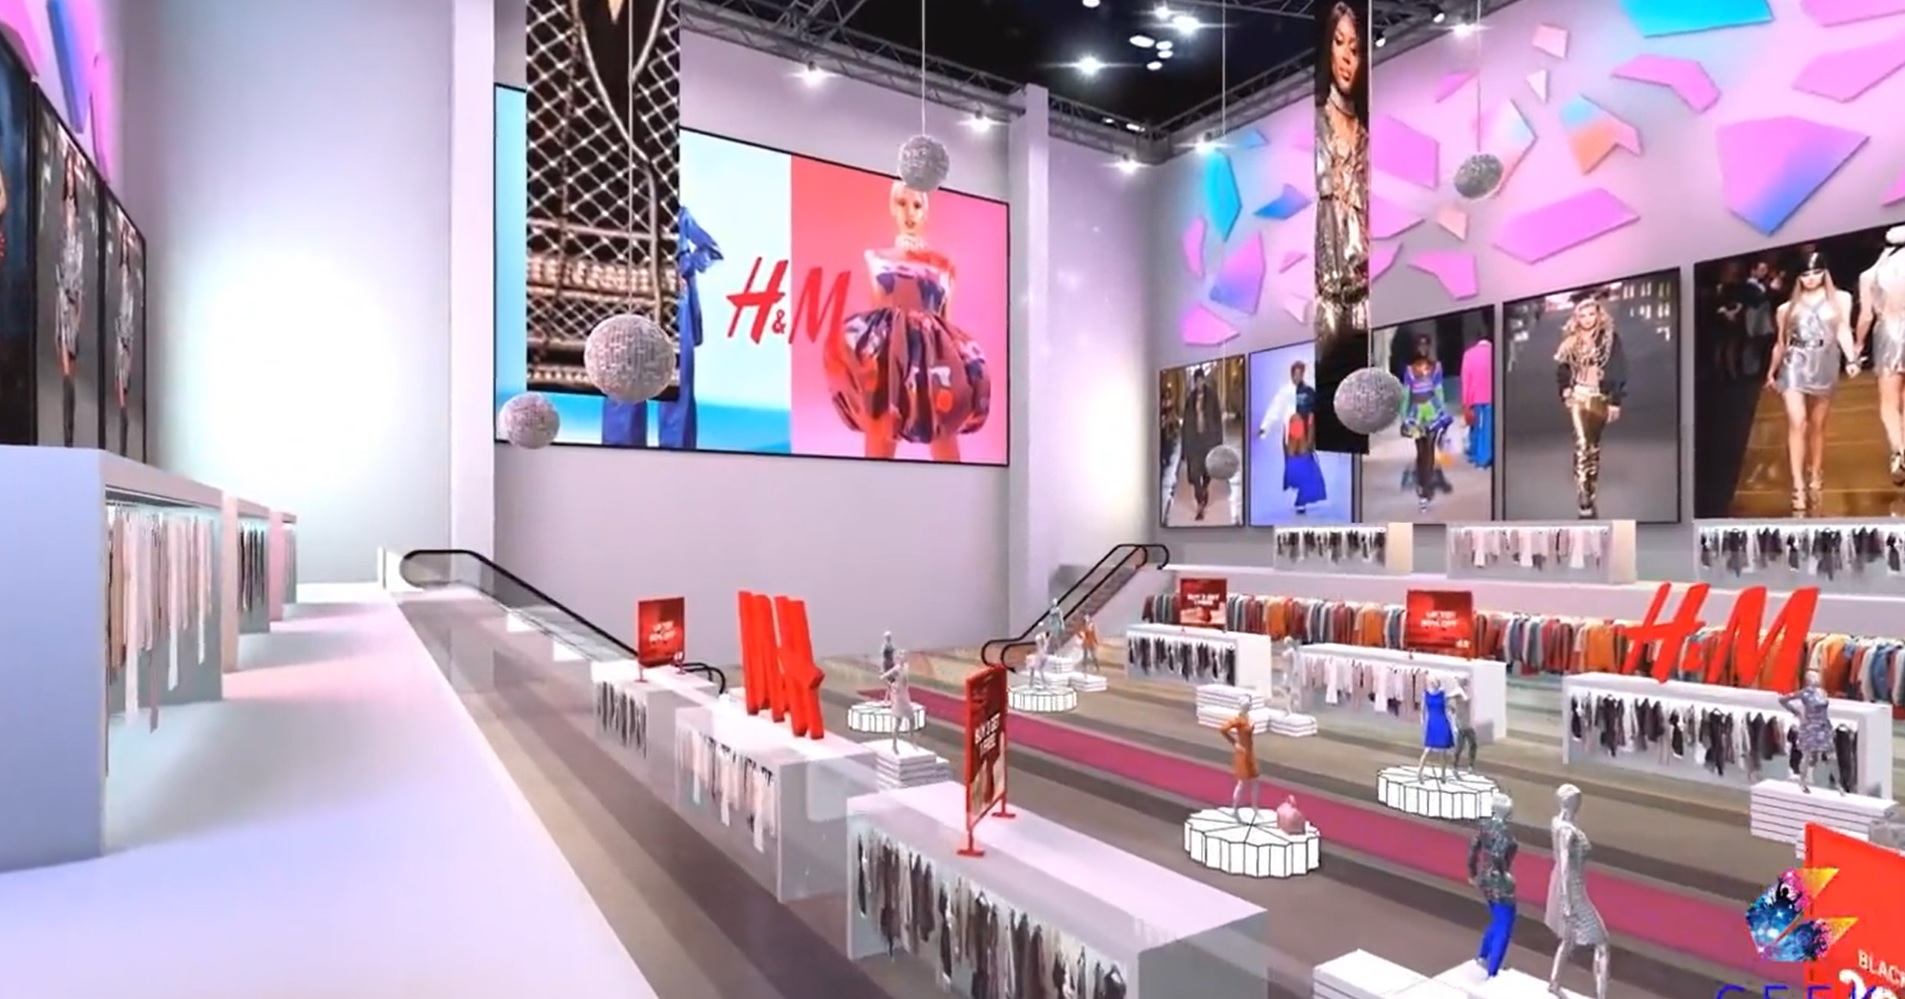 Varejista de moda sueca H&M lança loja virtual no metaverso -  Mercado&Consumo